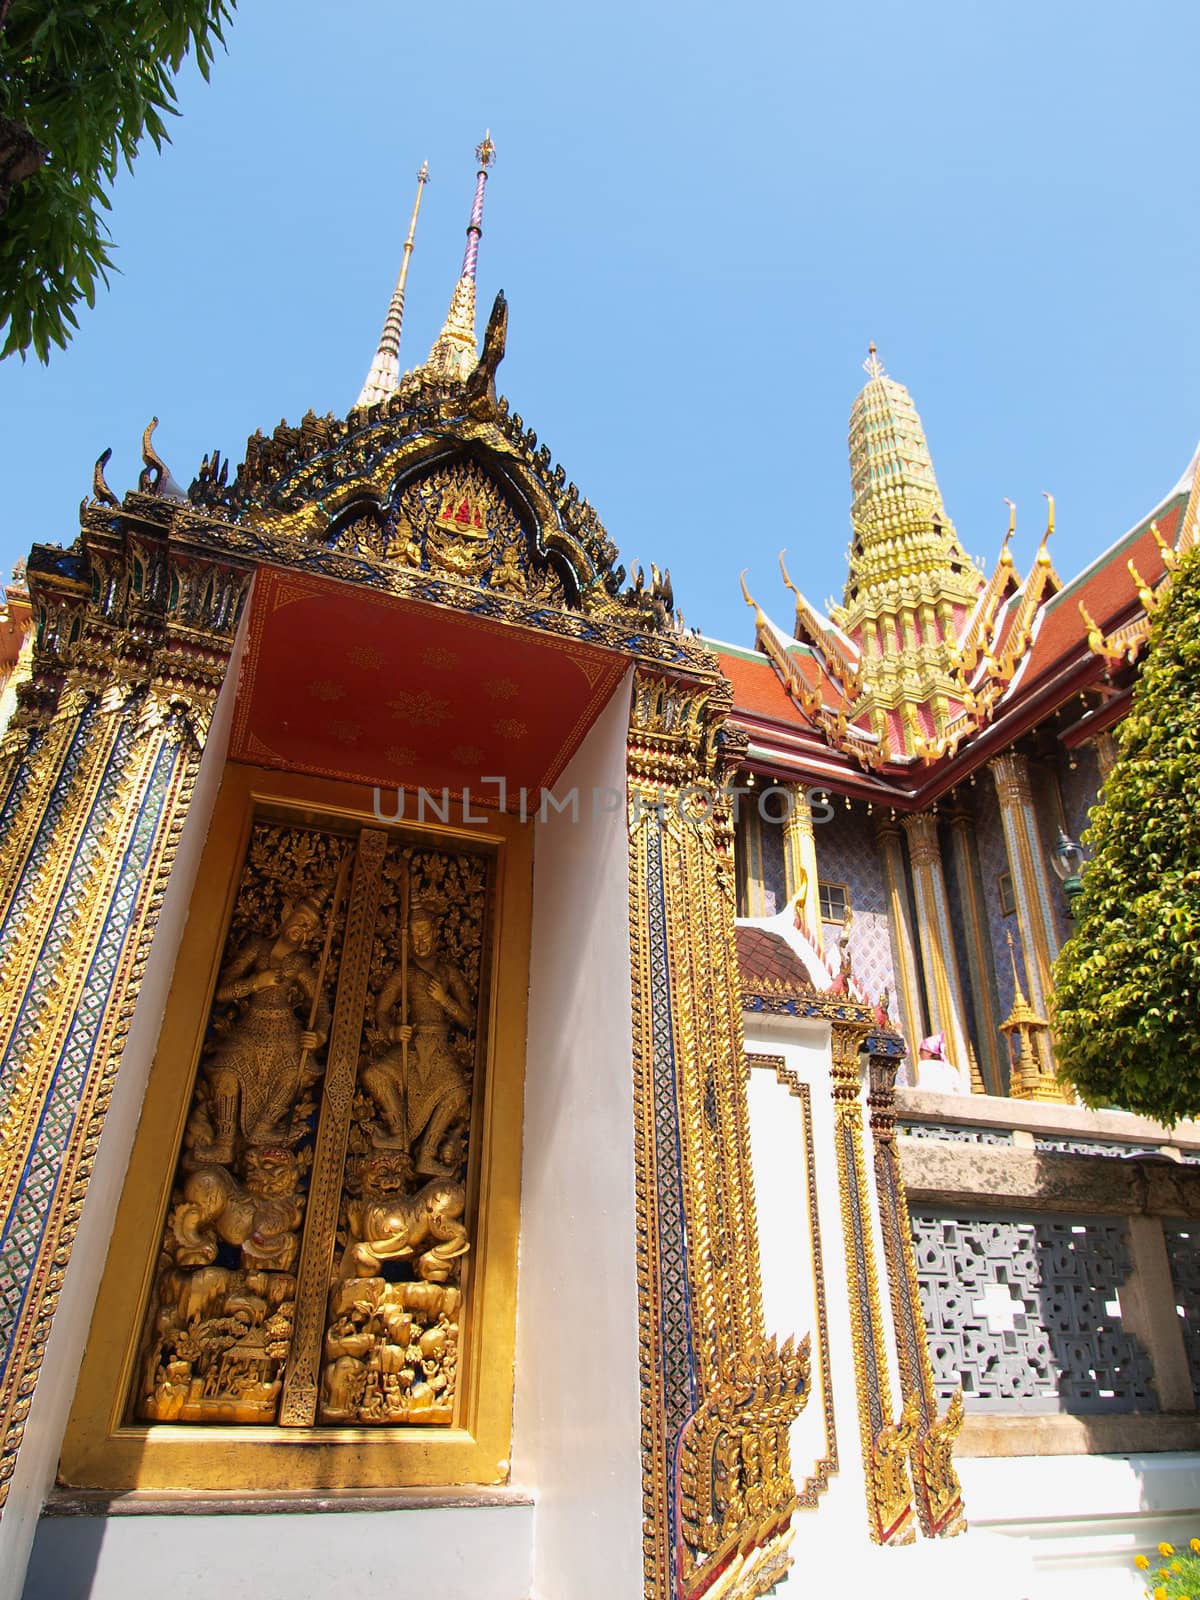 The Grand Palace ,Bangkok Thailand by jakgree